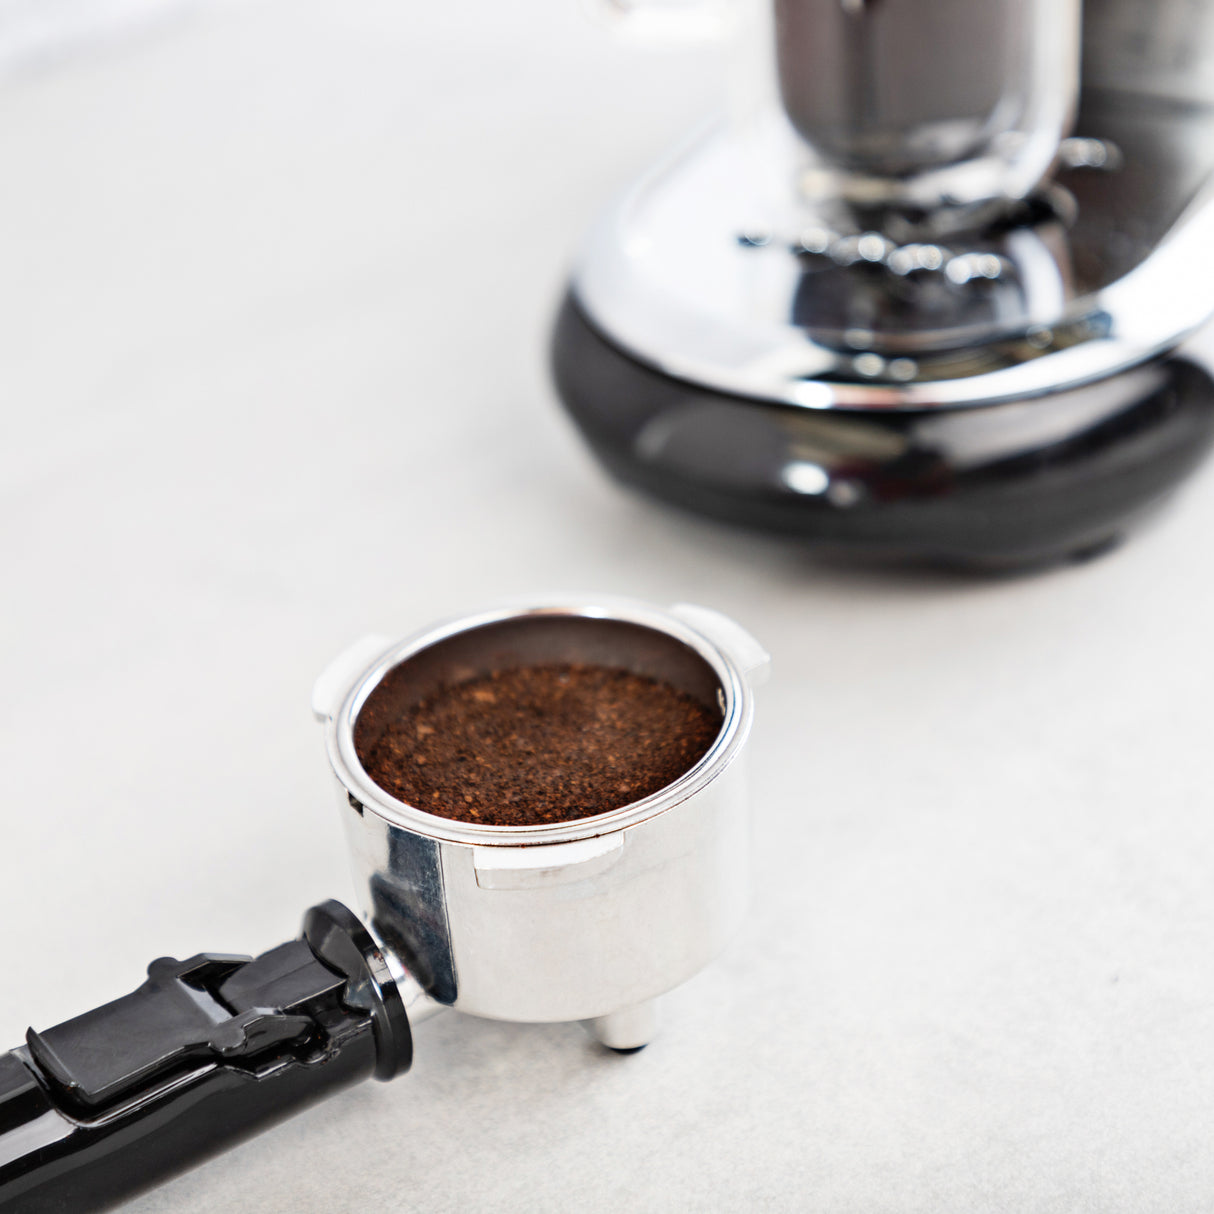 Vitinni Espresso Machine - Coffee Machine with Milk Frother